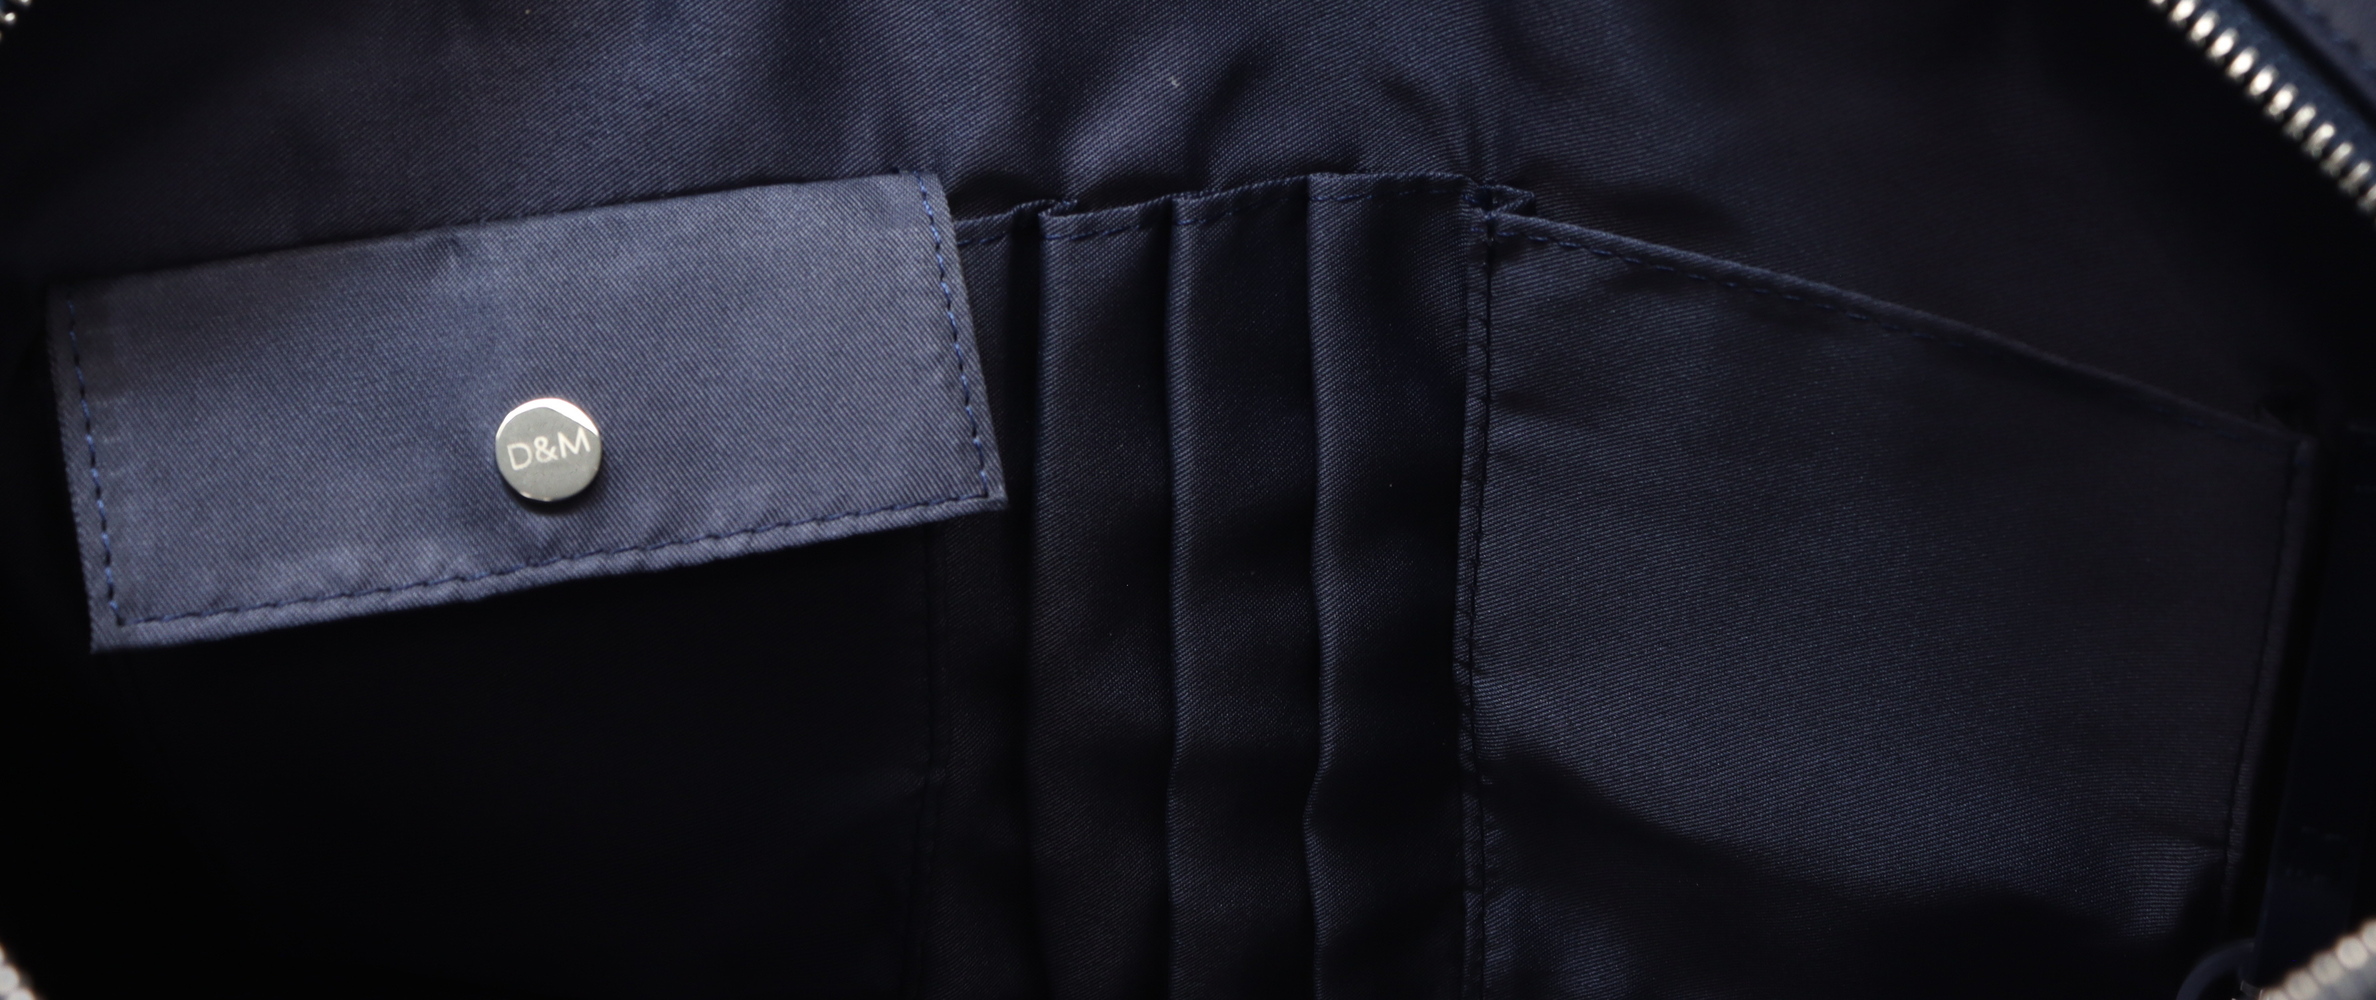 douglas & mckay navy blue/white leather business tote